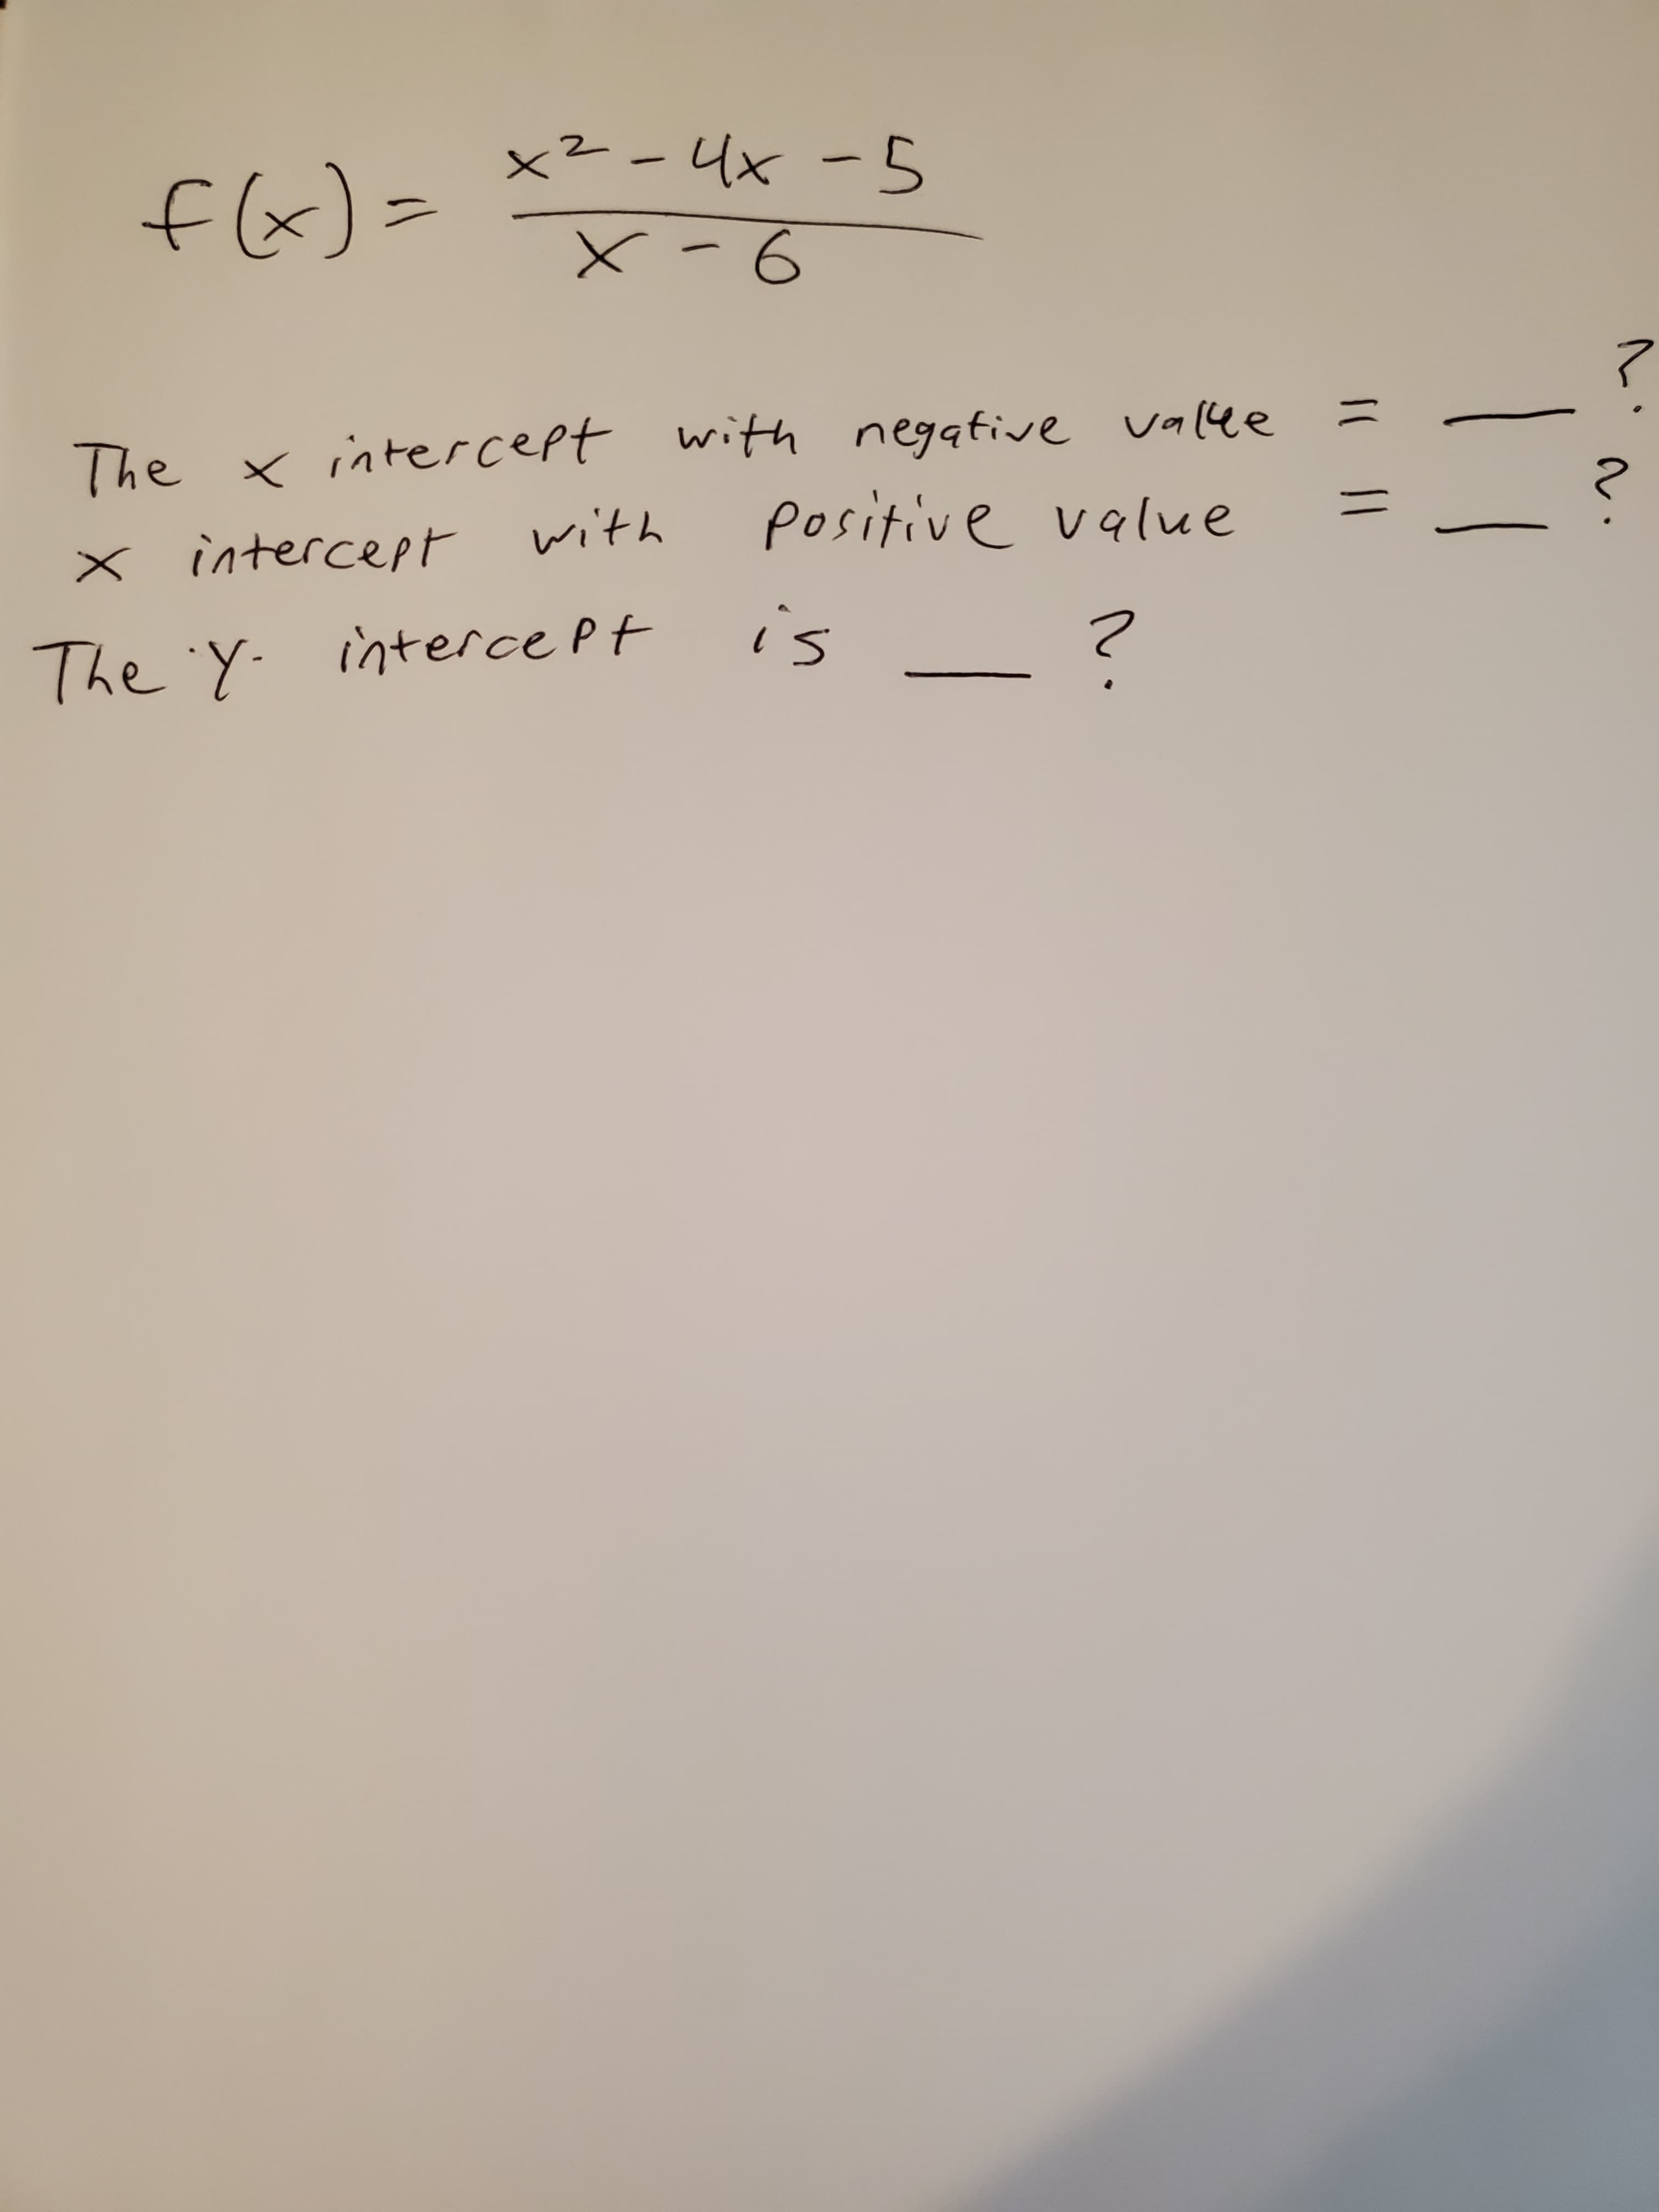 x²-4x -5
flx)=
9-メ
The x intercept with negative valke
positive value
2.
with
x intercept
is
The 'Y. interce Pt
